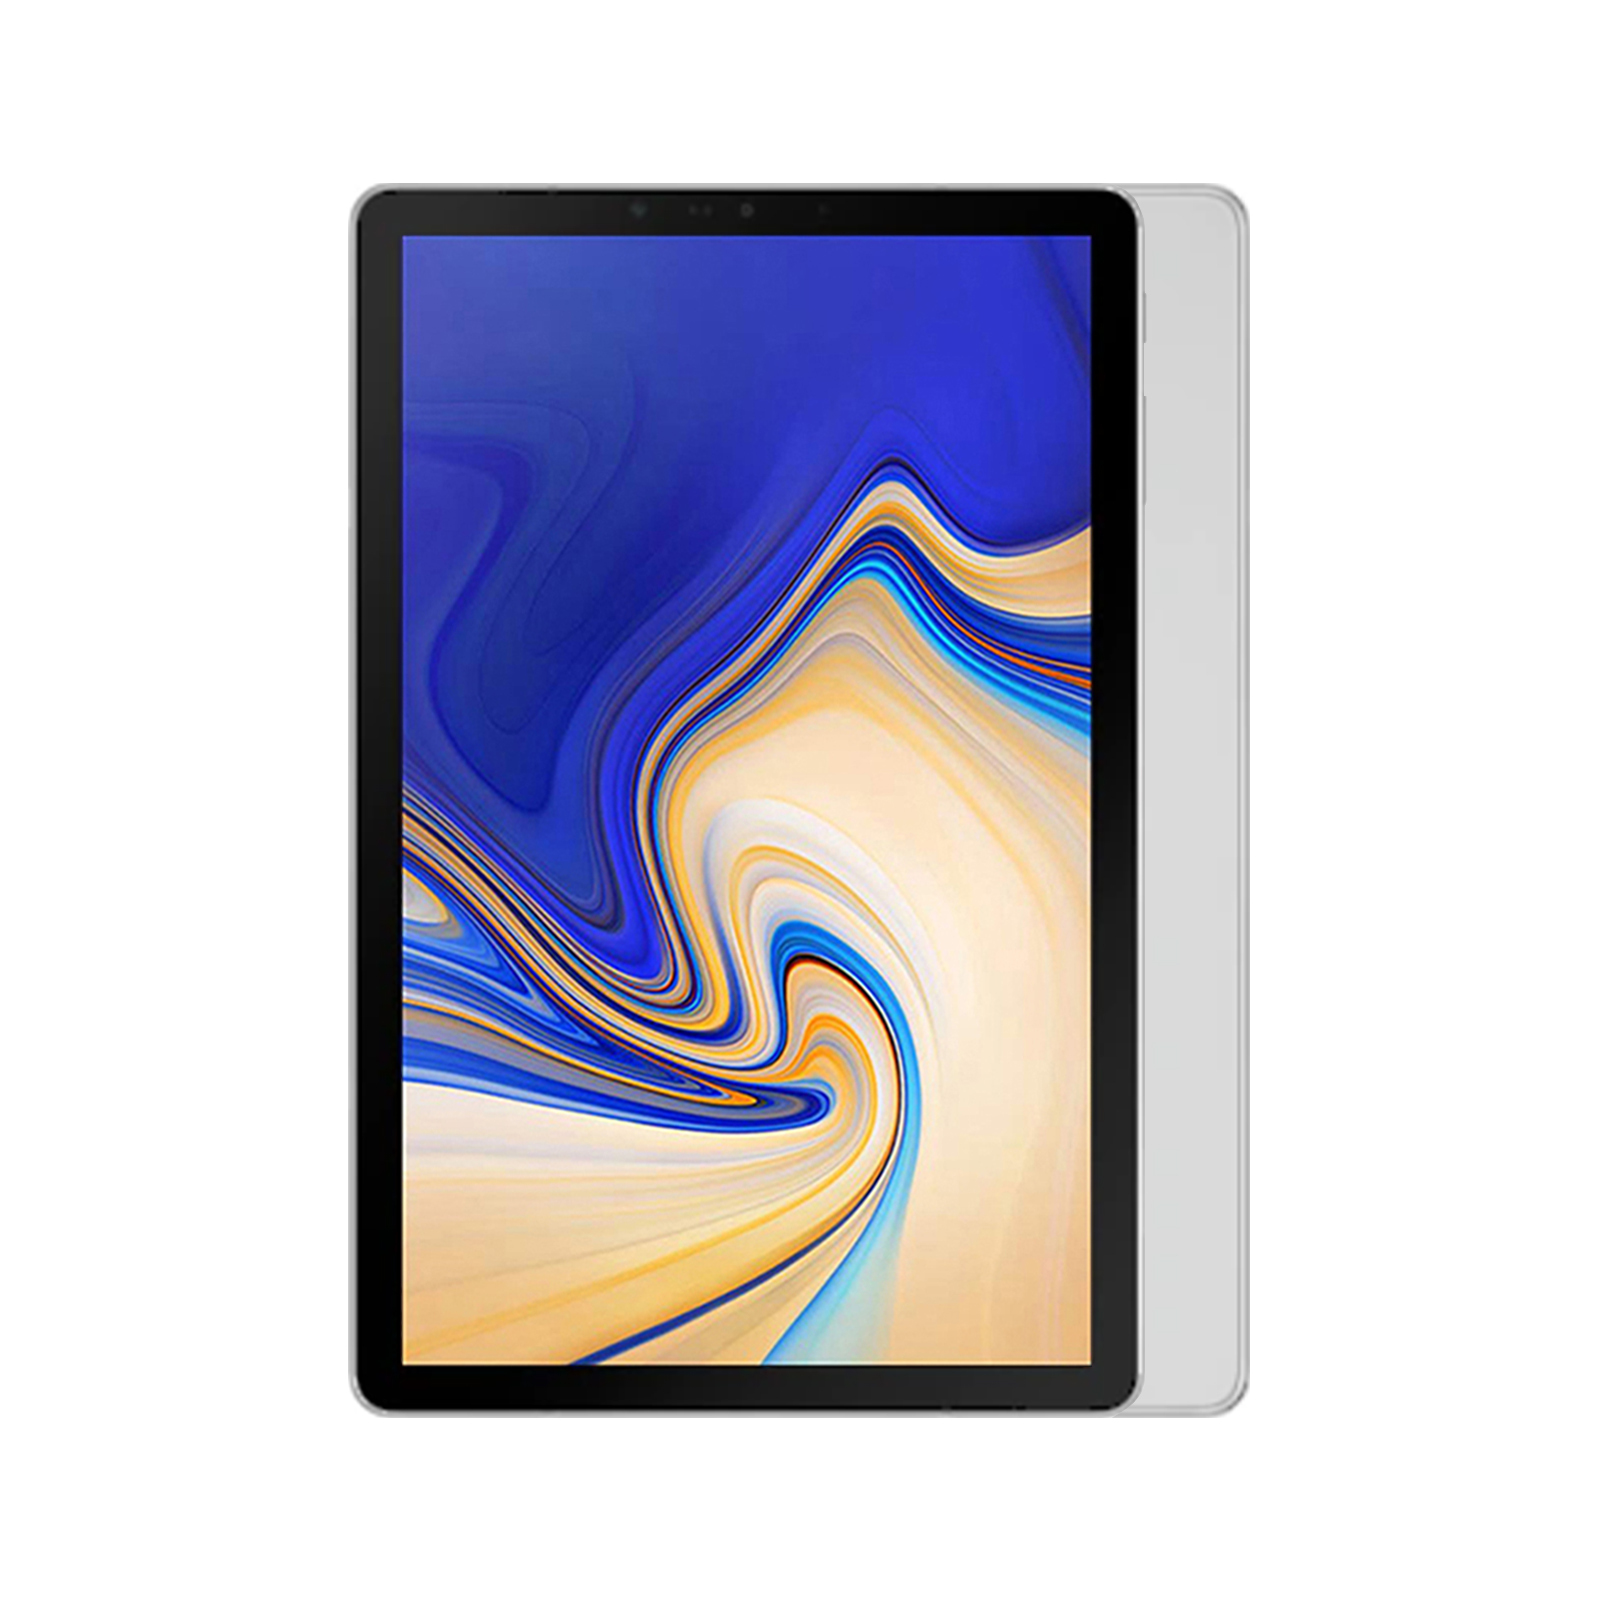 Samsung Galaxy Tab S4 (T835) [WiFi/4G] [64GB] [White] [Excellent]